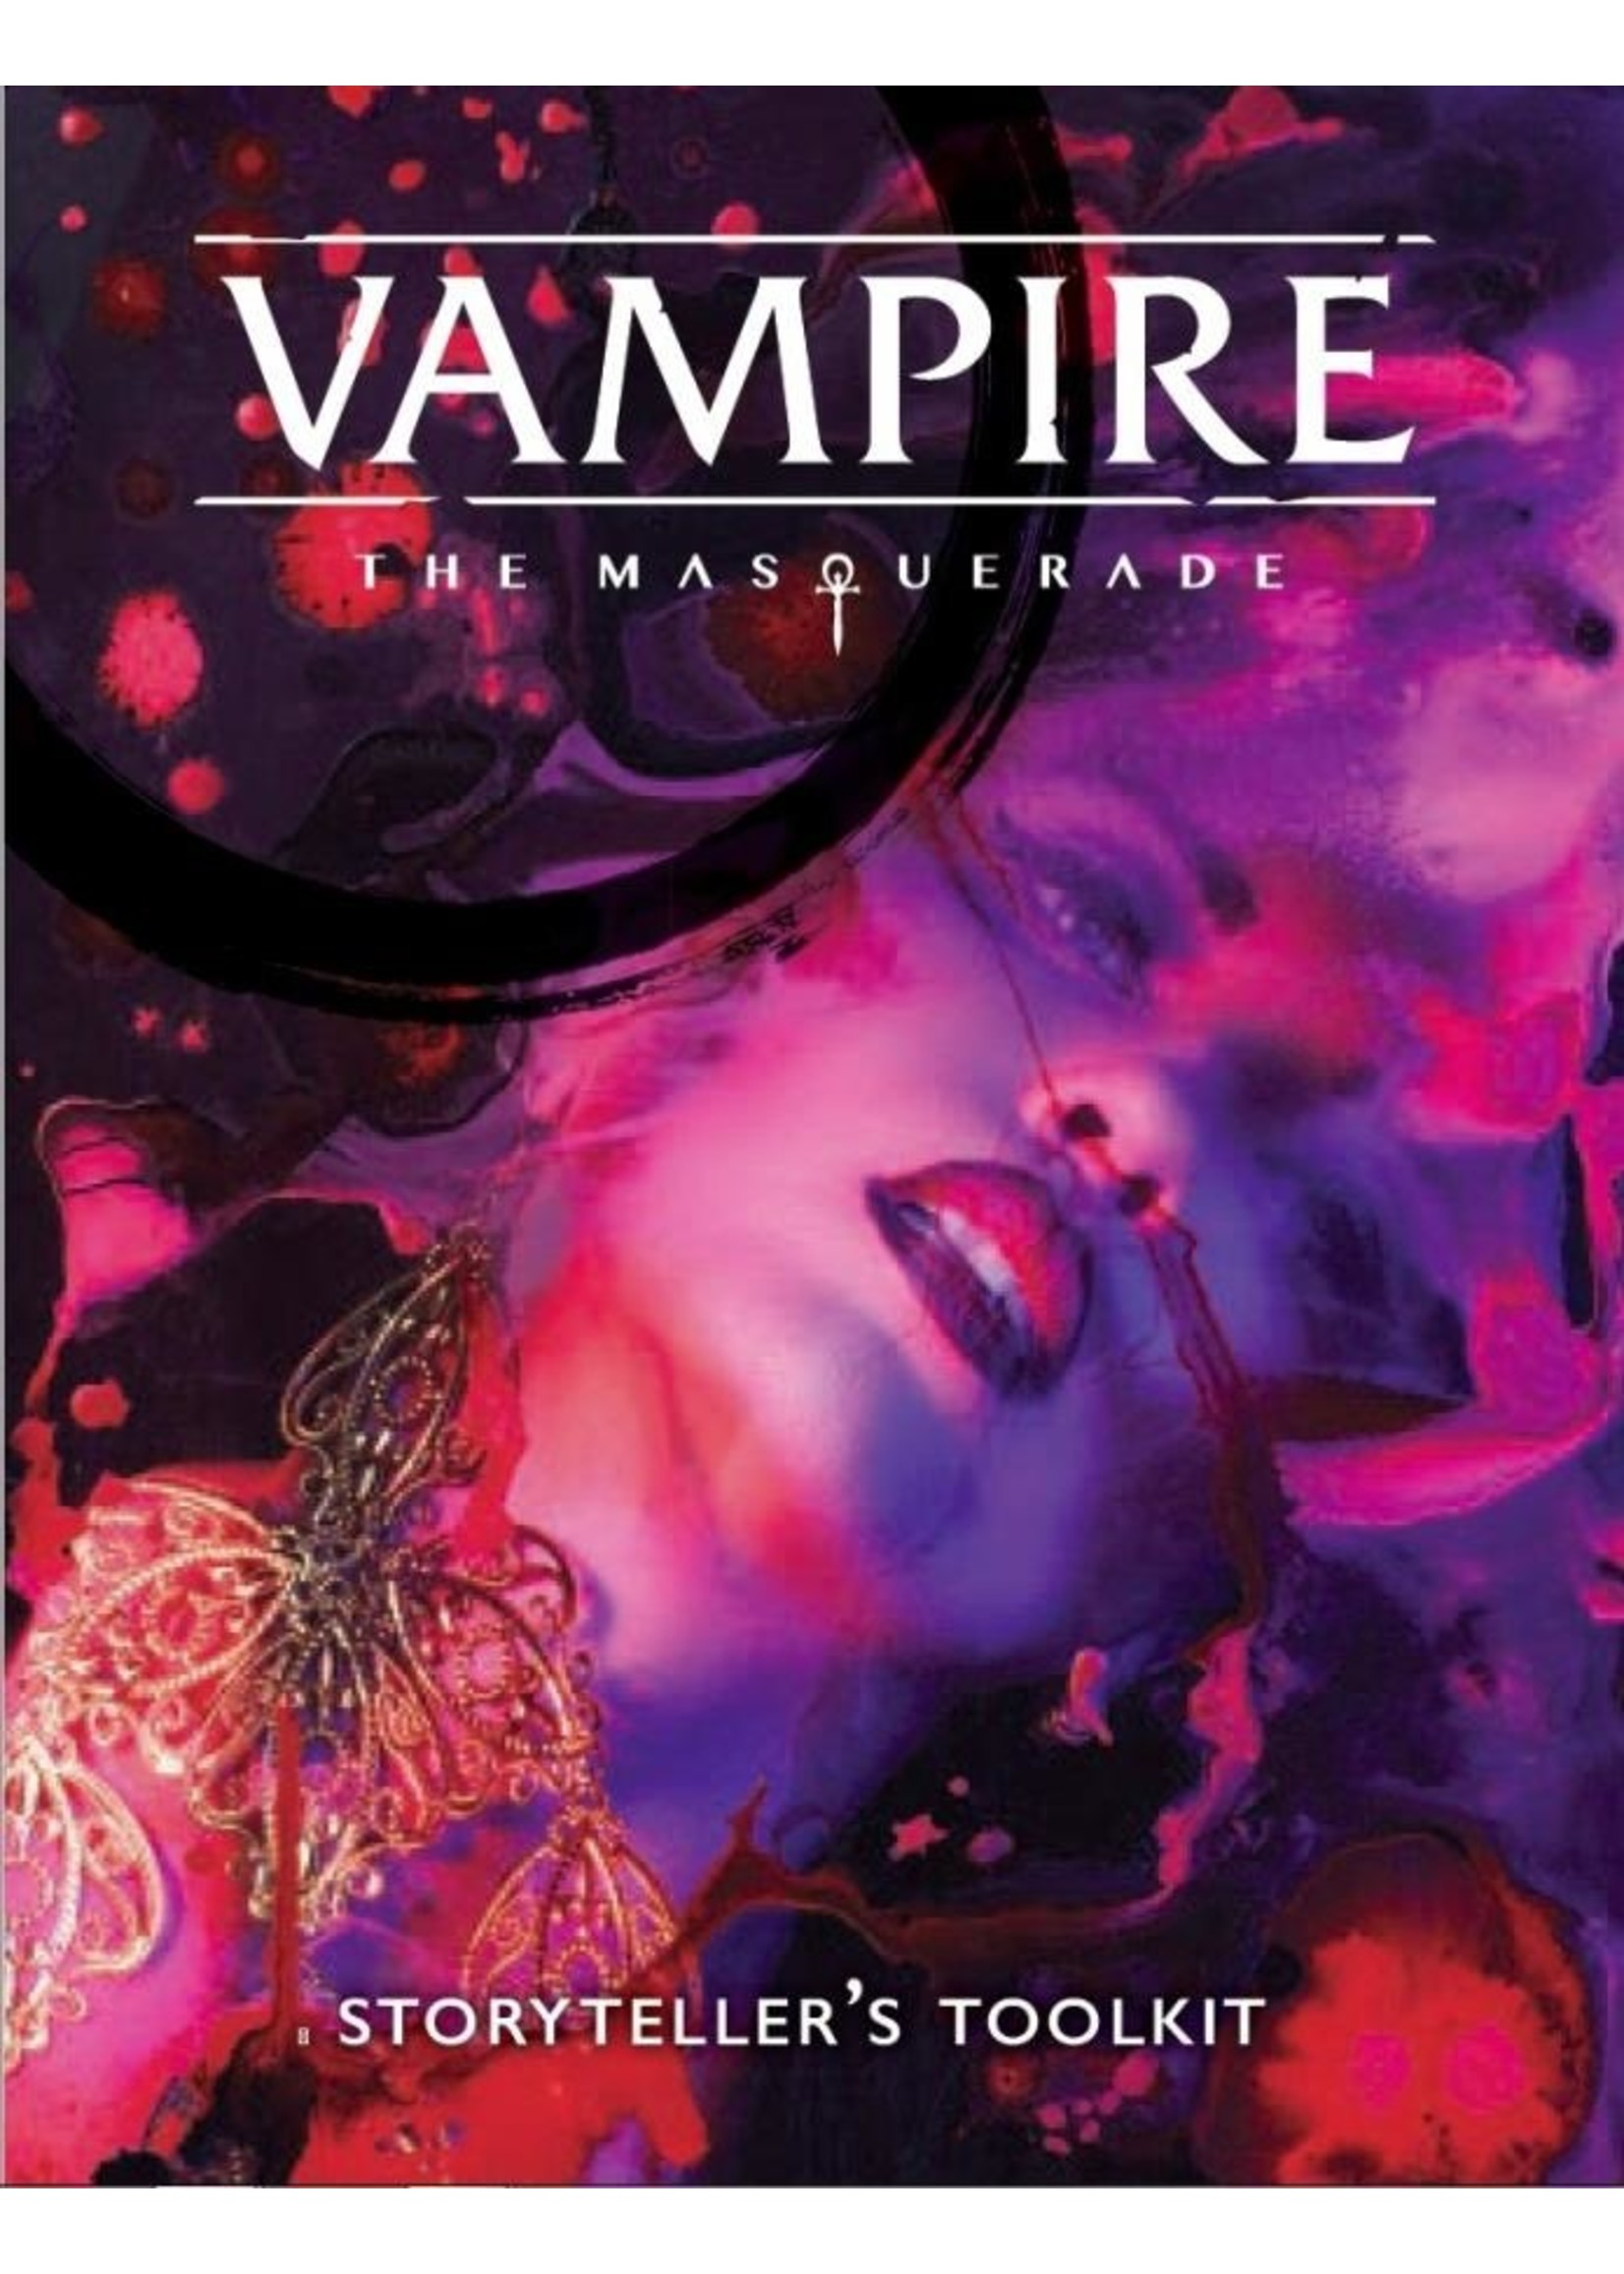 Vampire The Masquerade: 5th Edition Storyteller's Toolkit